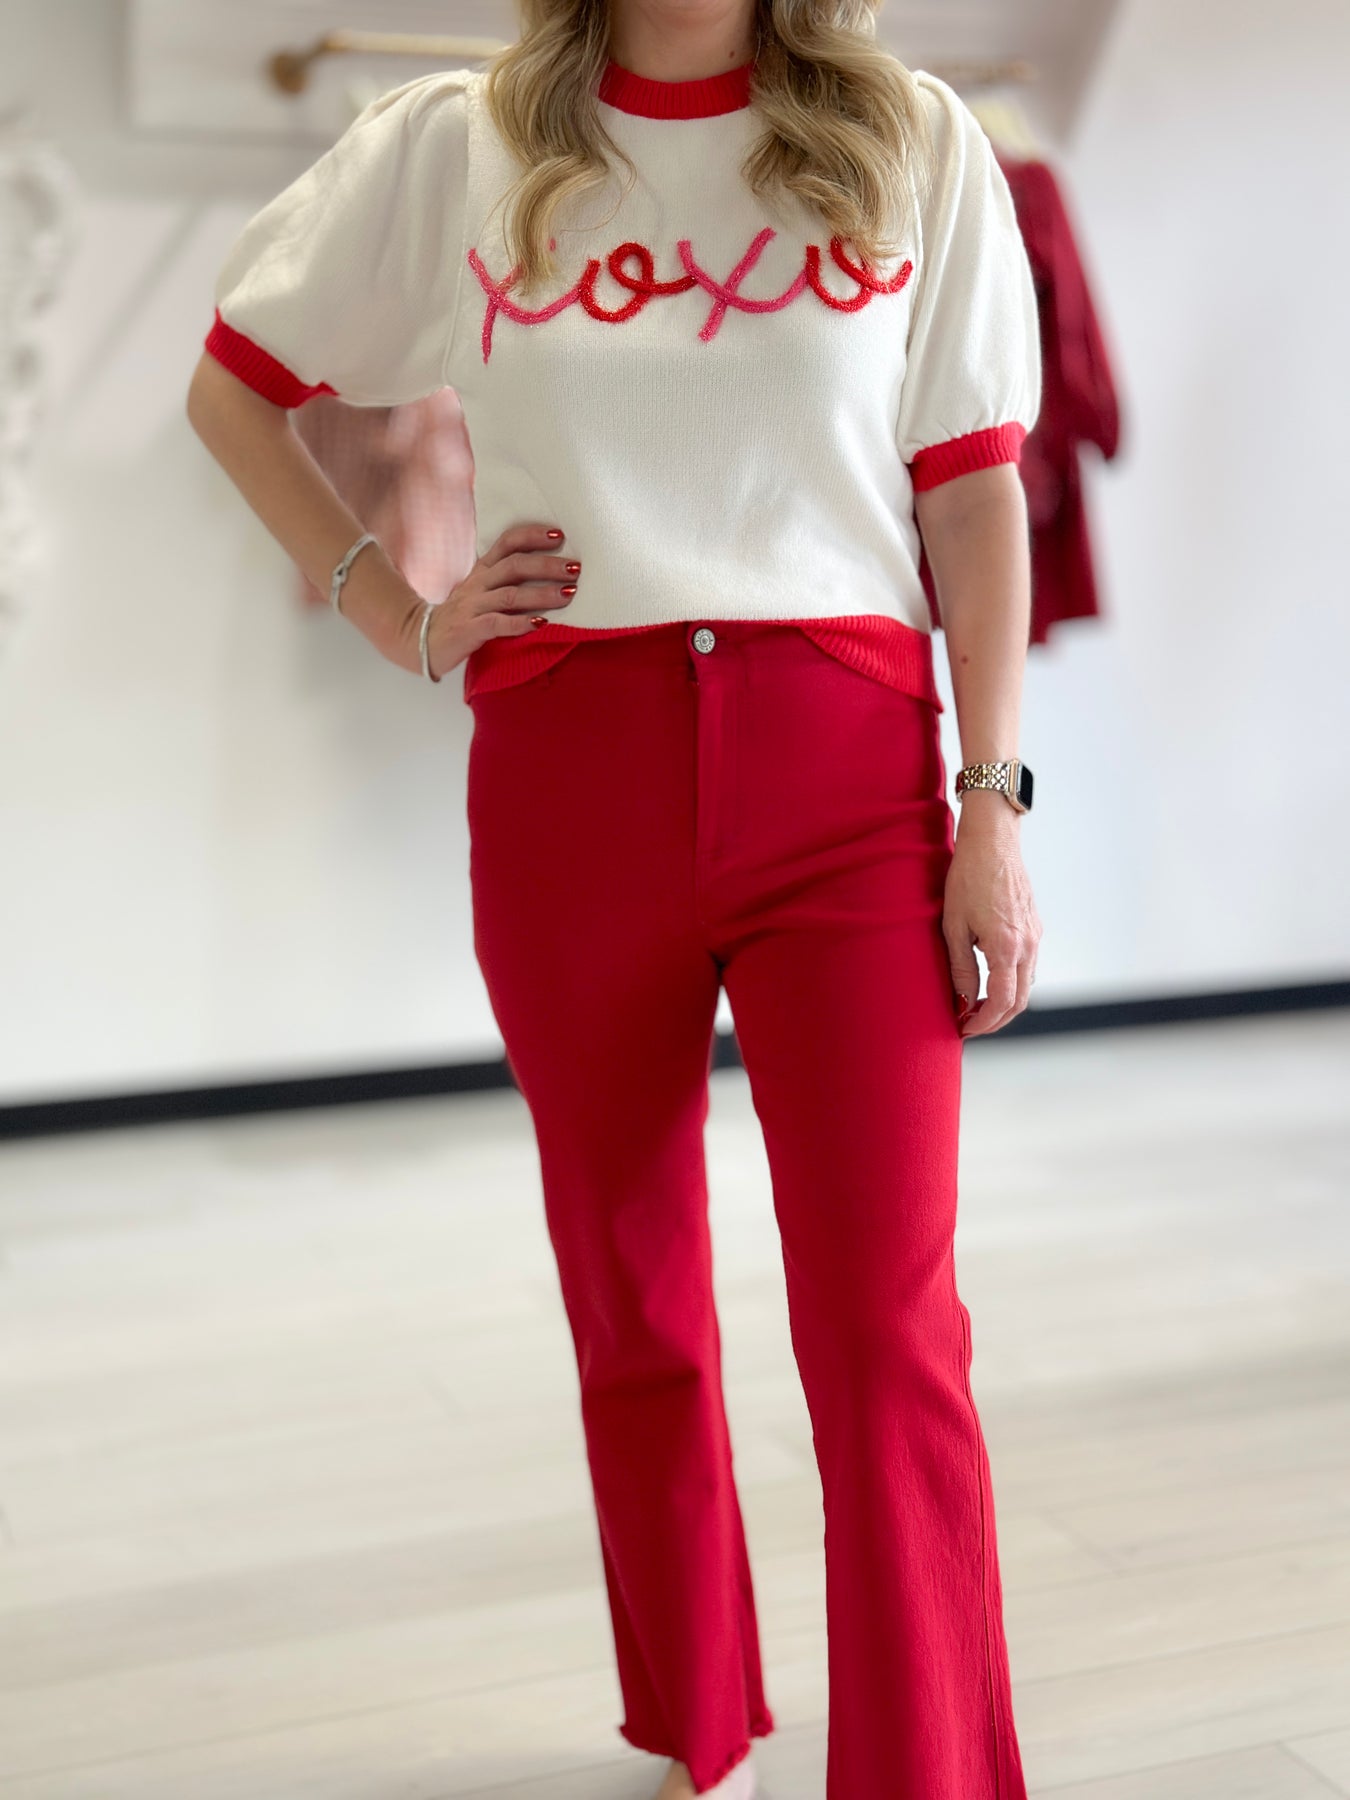 woman wearing red pants